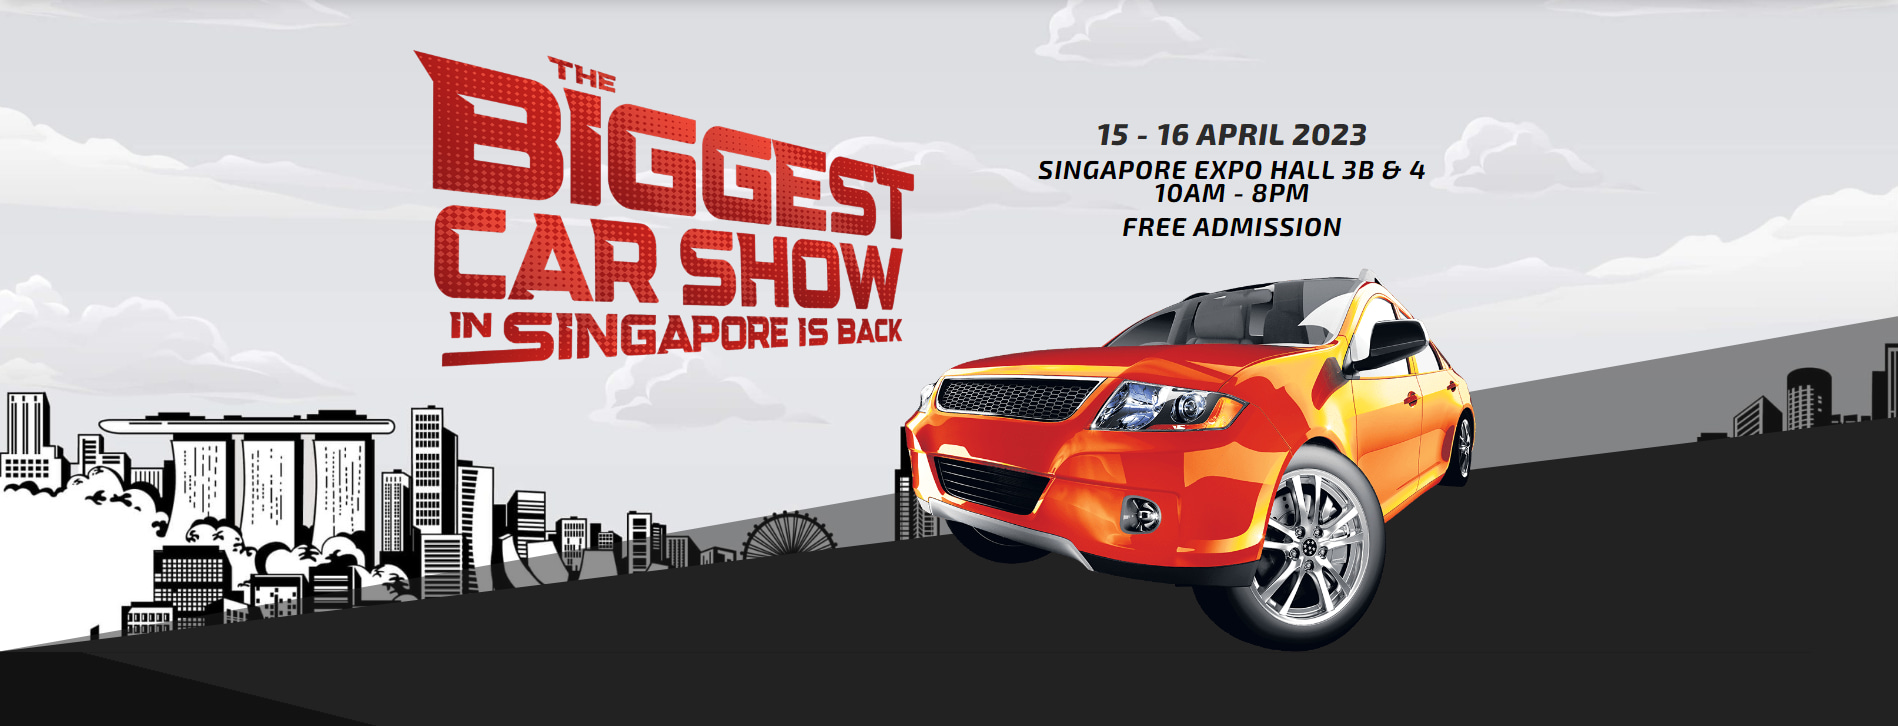 CARSEXPO 2023 Singapore Expo